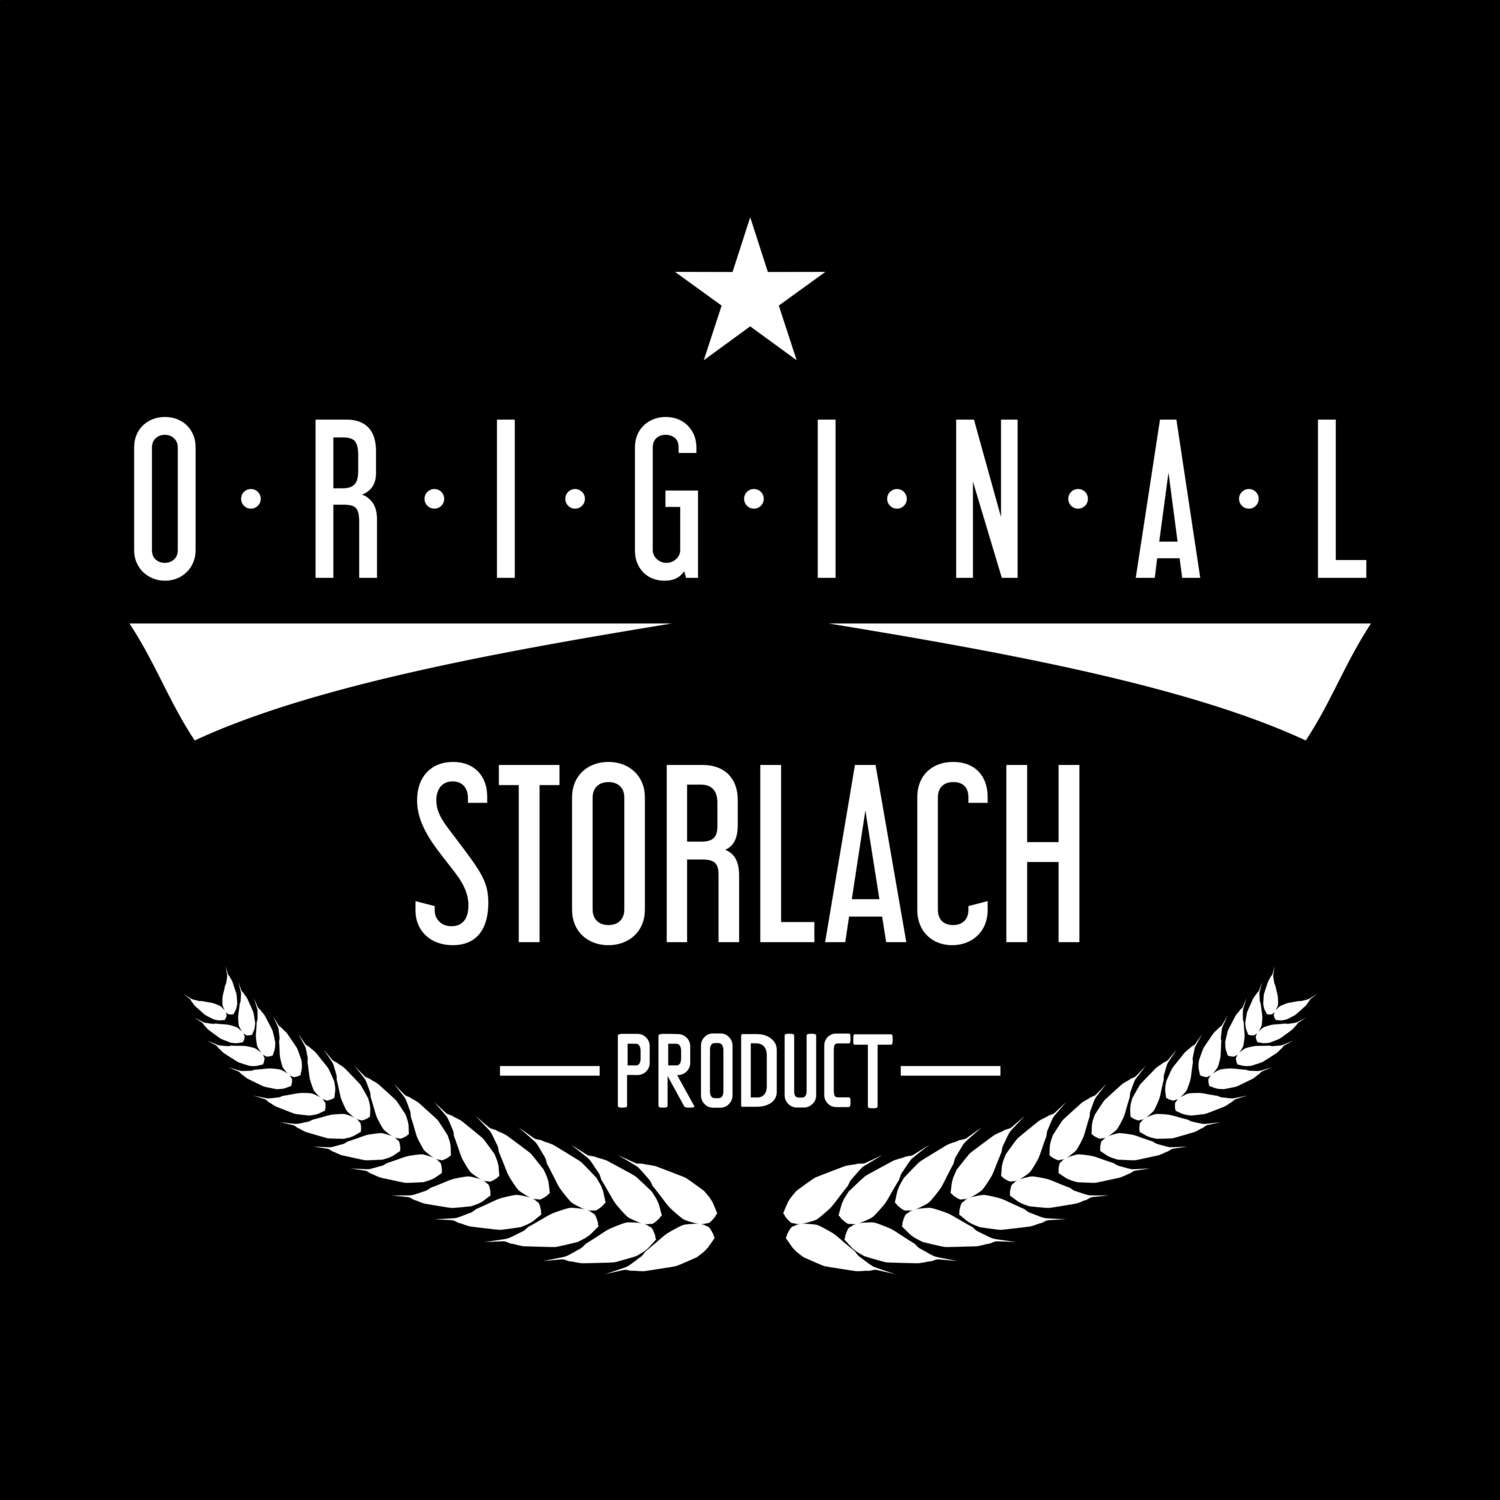 Storlach T-Shirt »Original Product«